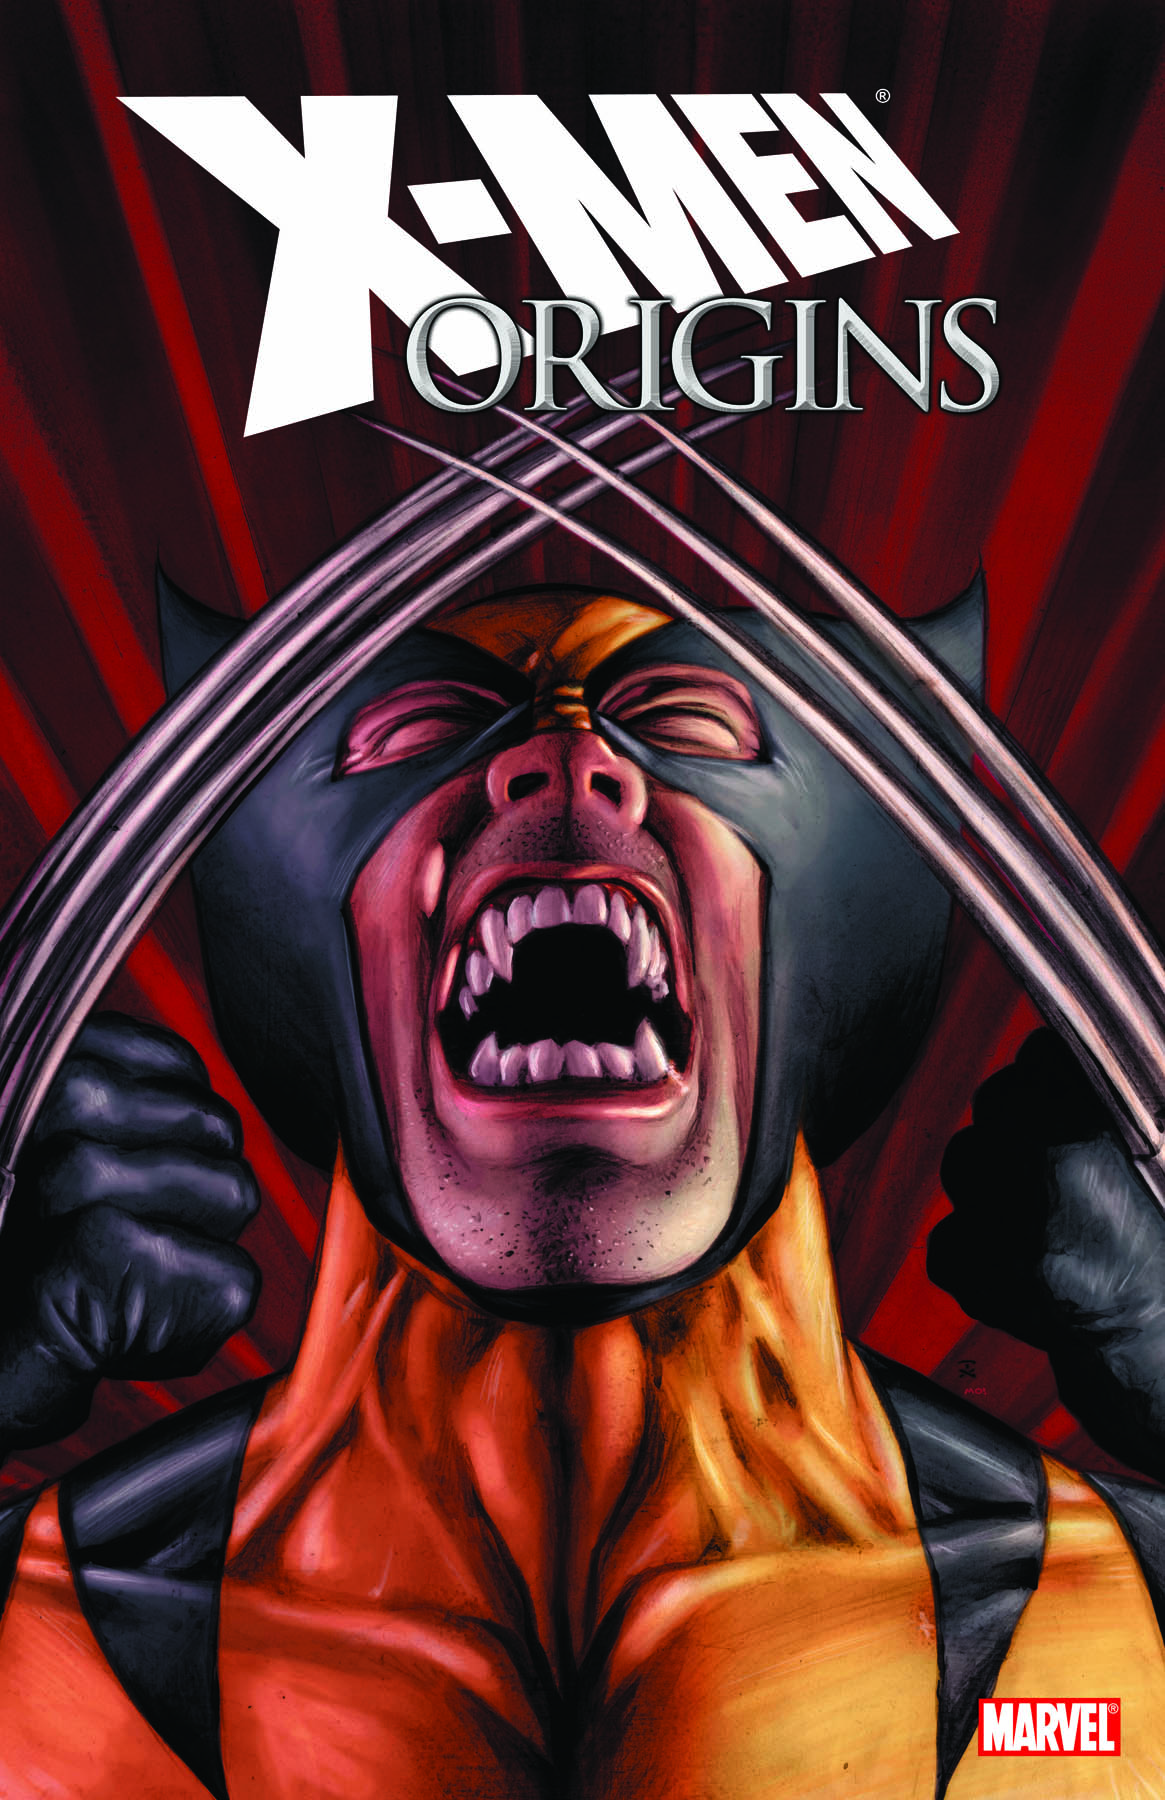 X-Men Origins (Trade Paperback)